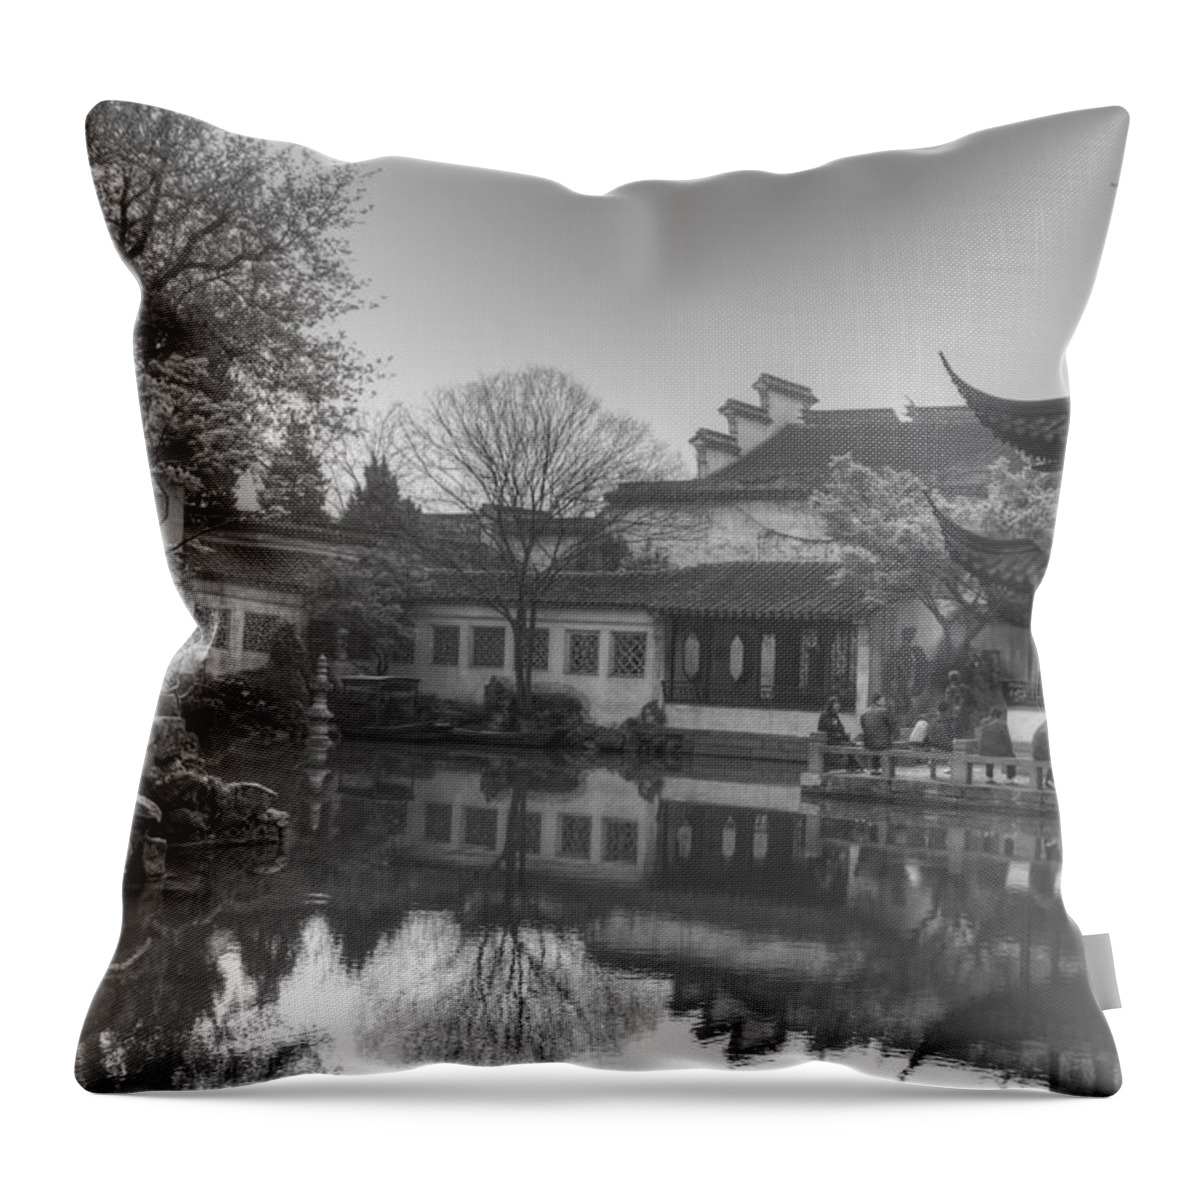 Suzhou Throw Pillow featuring the photograph Master of the Nets Garden by Bill Hamilton